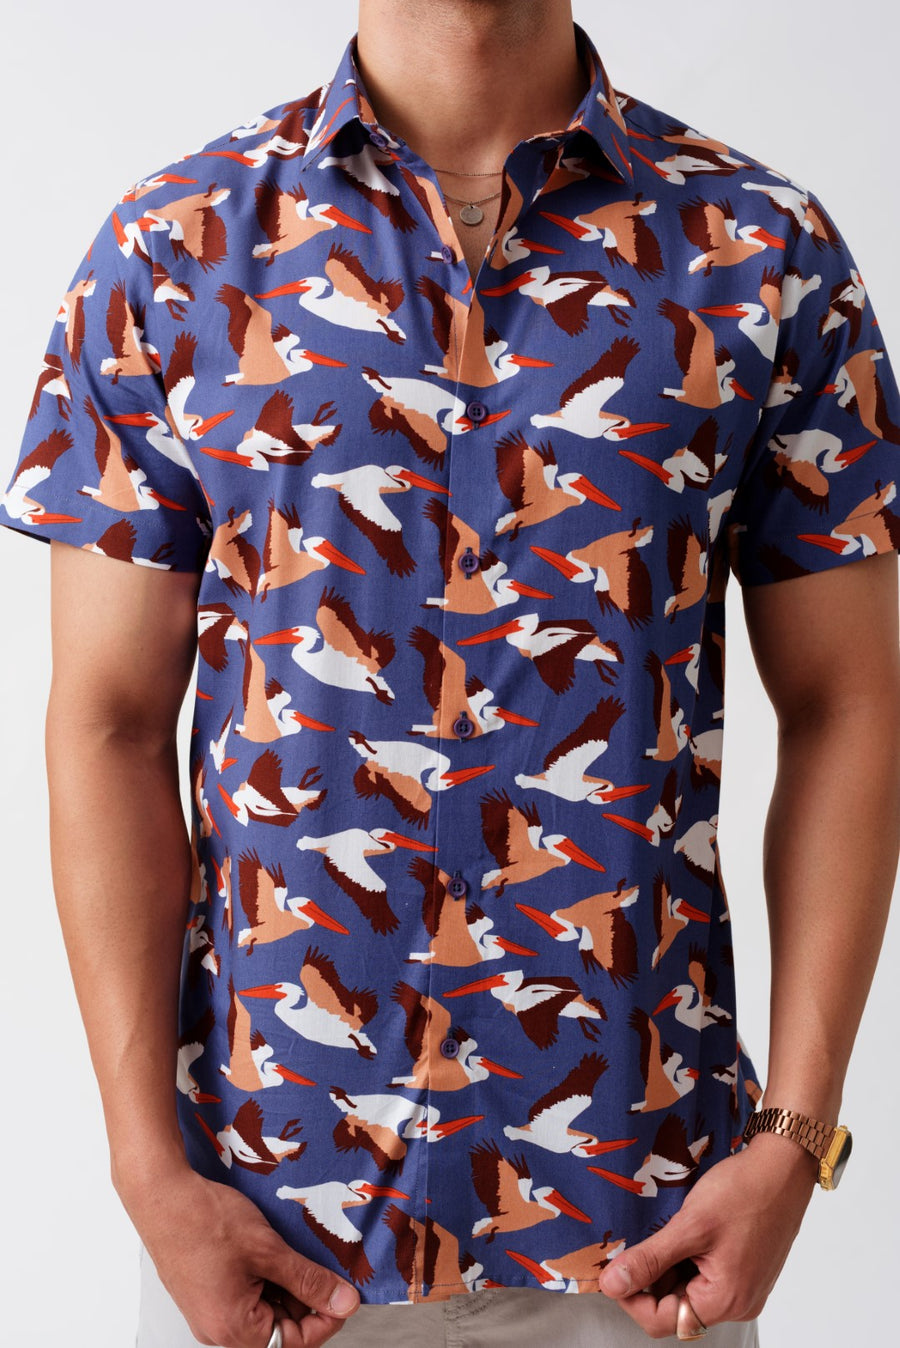 Pelican Print Cotton Half Sleeves Shirt